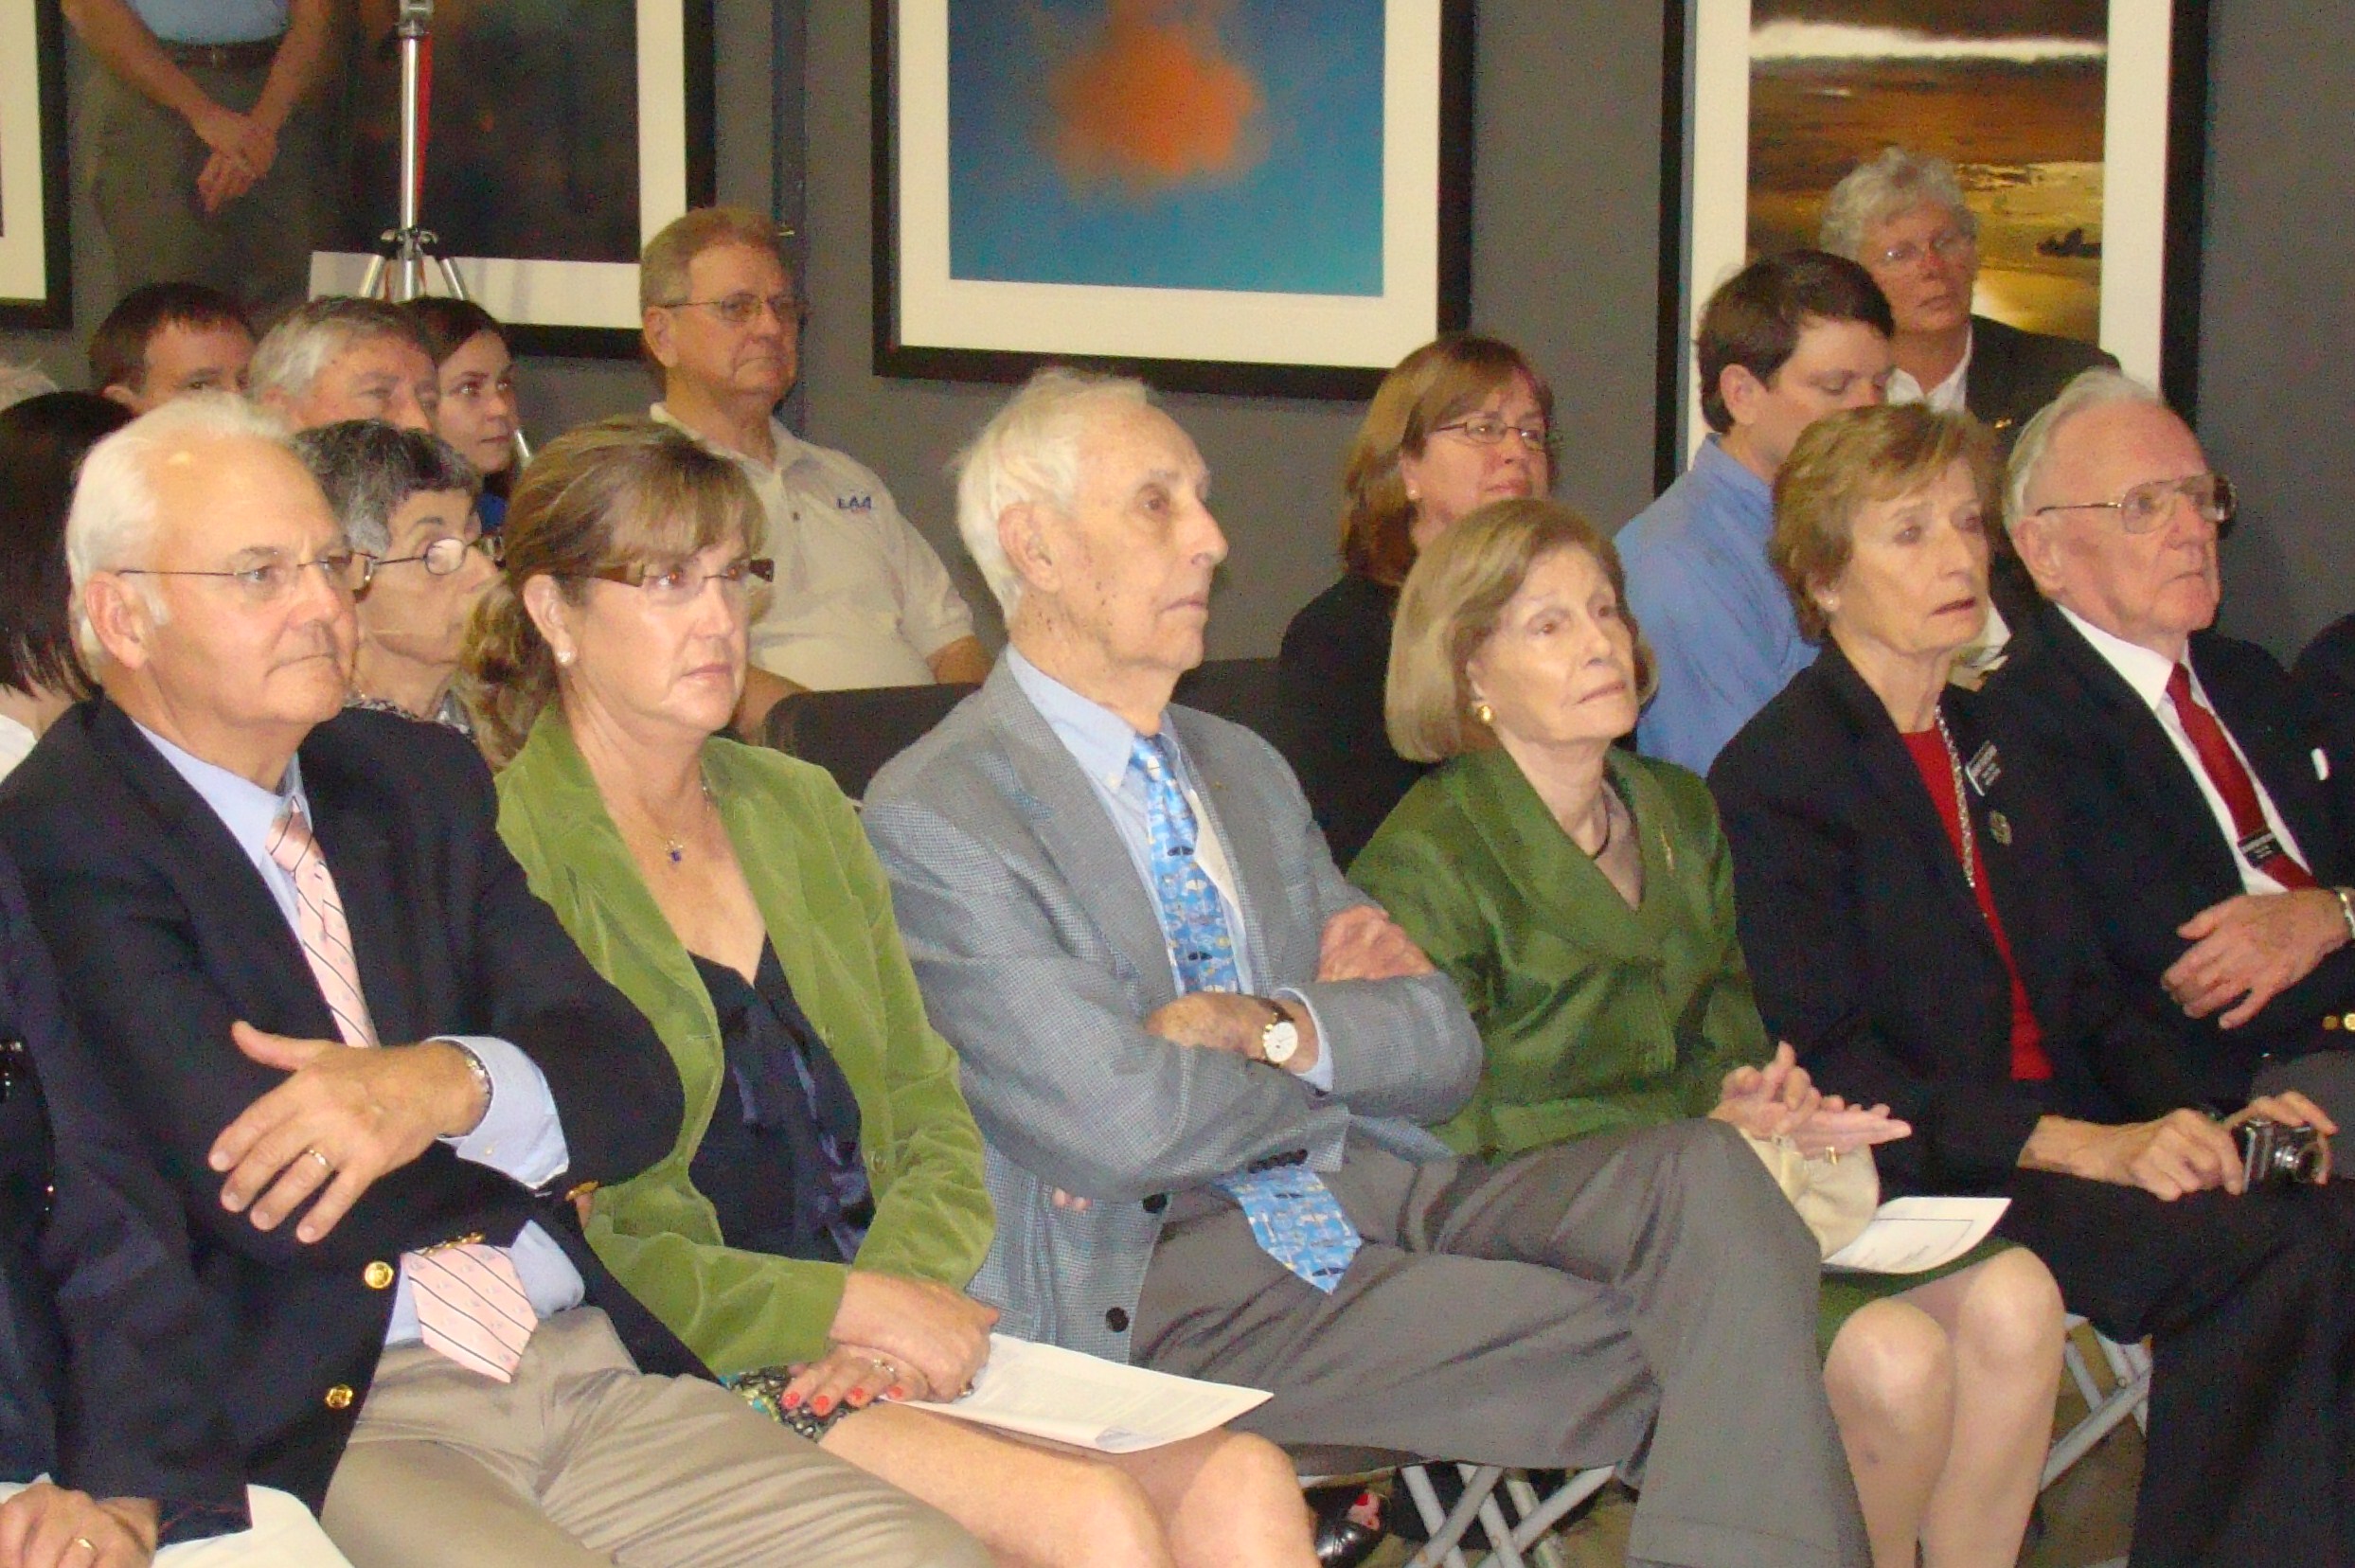 Bill Krusen & Family with Dr. Warren Brown during Introduction, 28 Jan '12.JPG